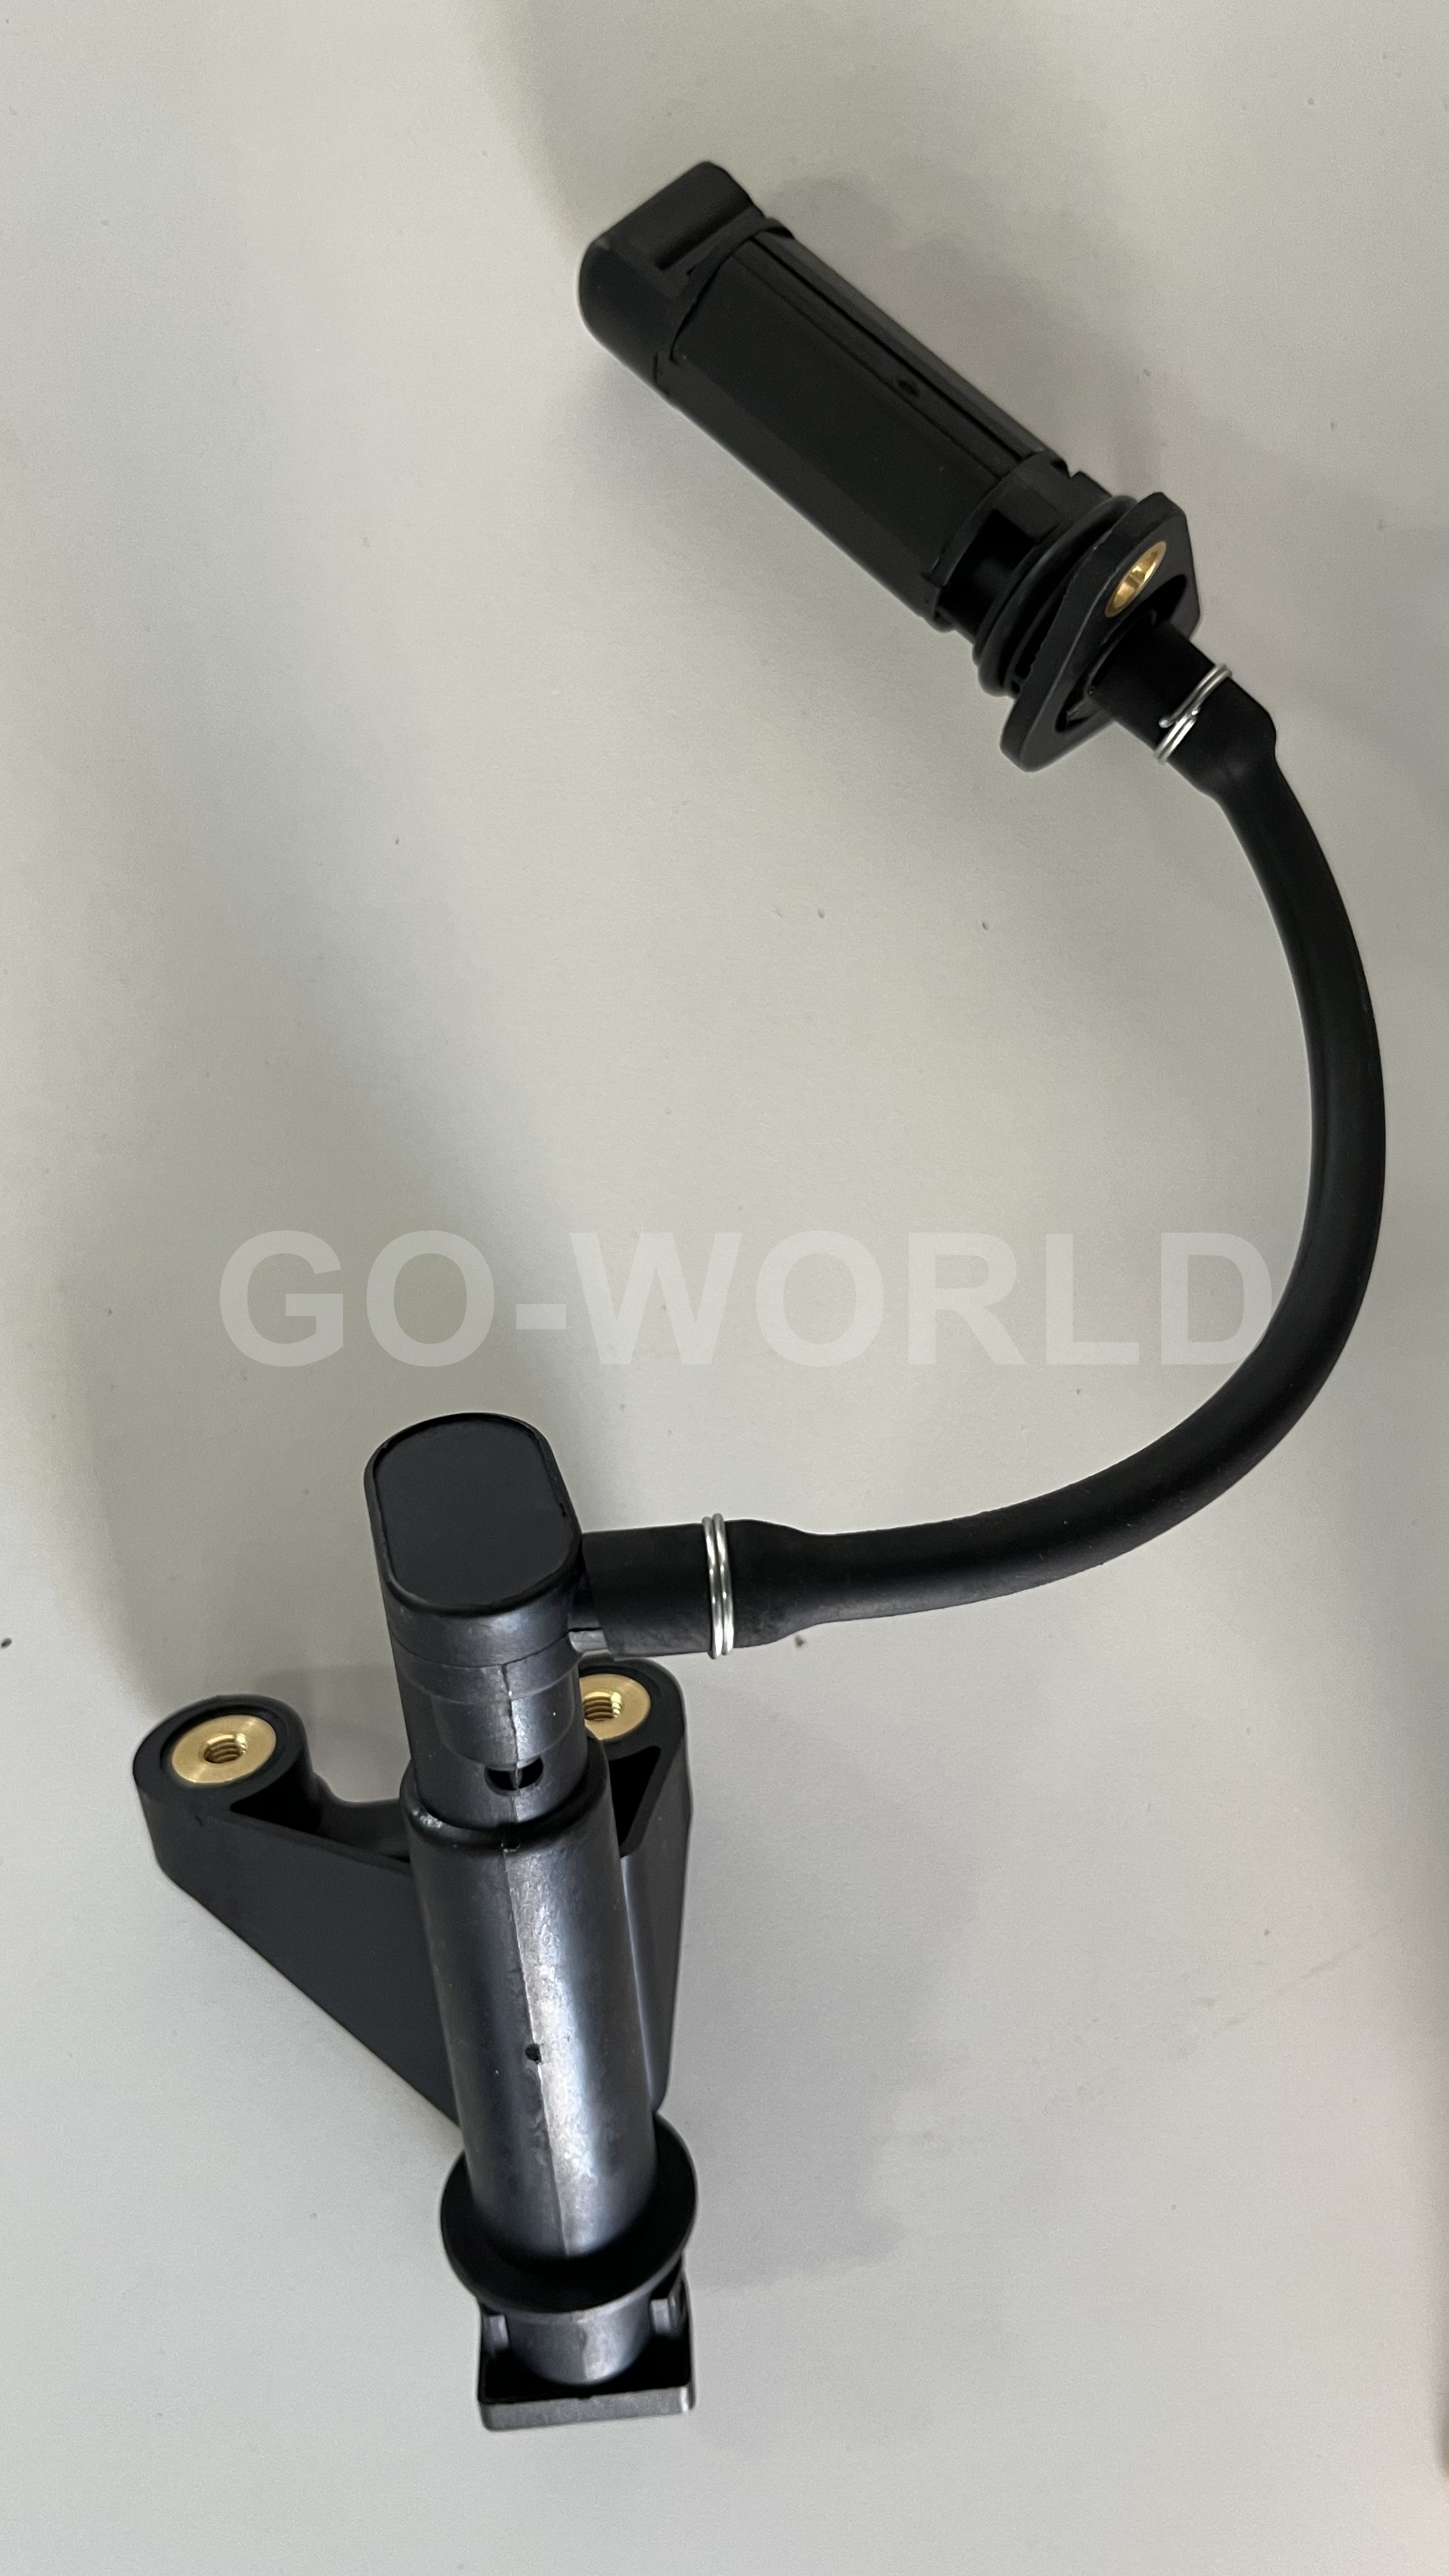 Go-world Engine High Quality Oil Level Sensor 0061532728 Suitable for Mercedes Benz CLK Convertible A209 2004 - 2008